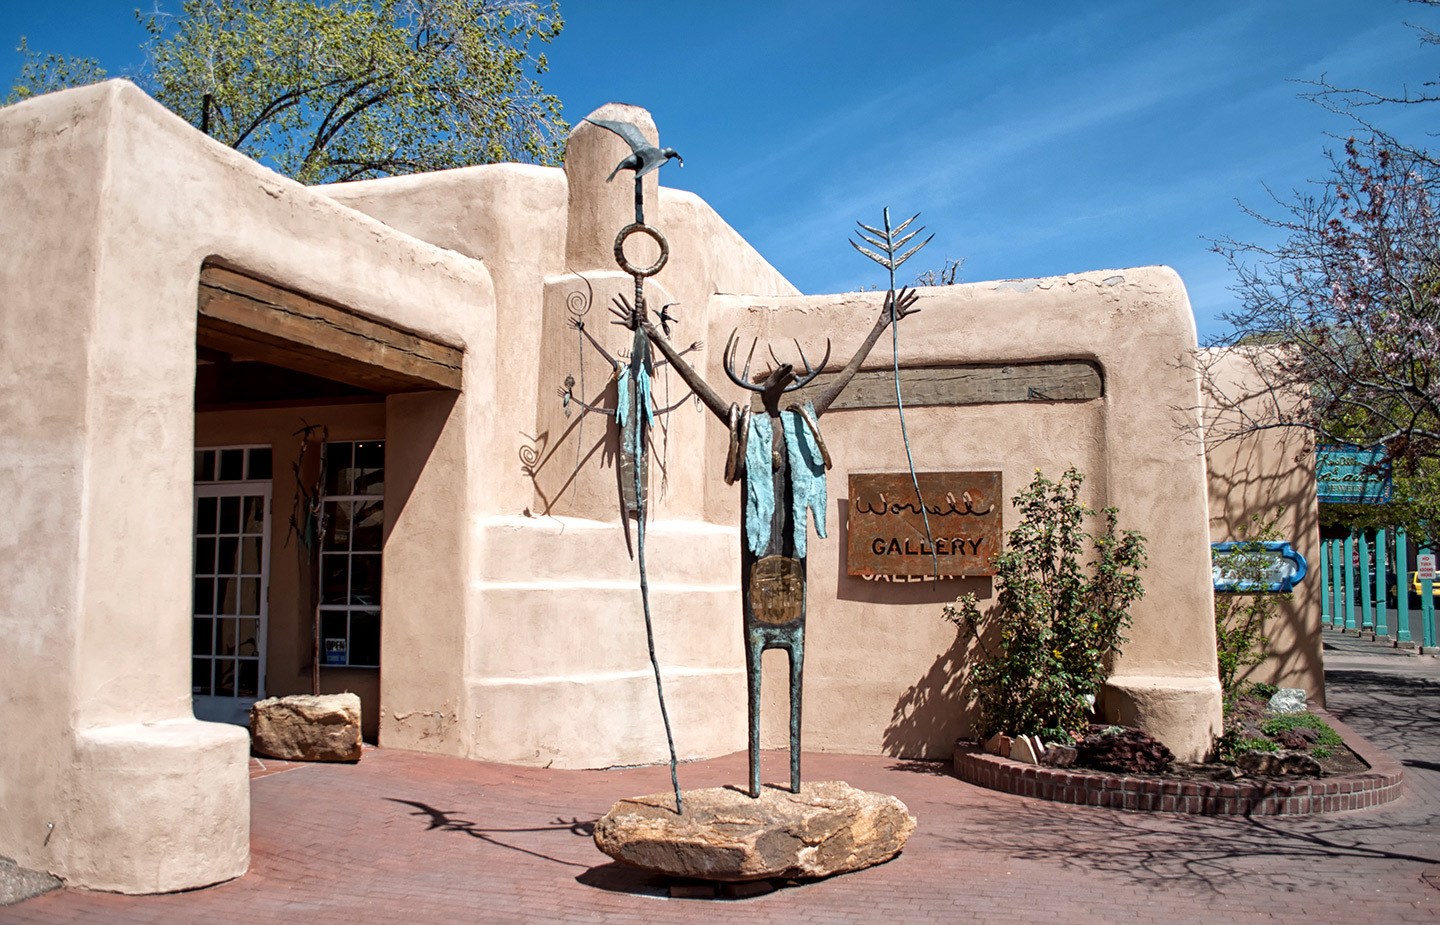 Art gallery in Santa Fe, New Mexico